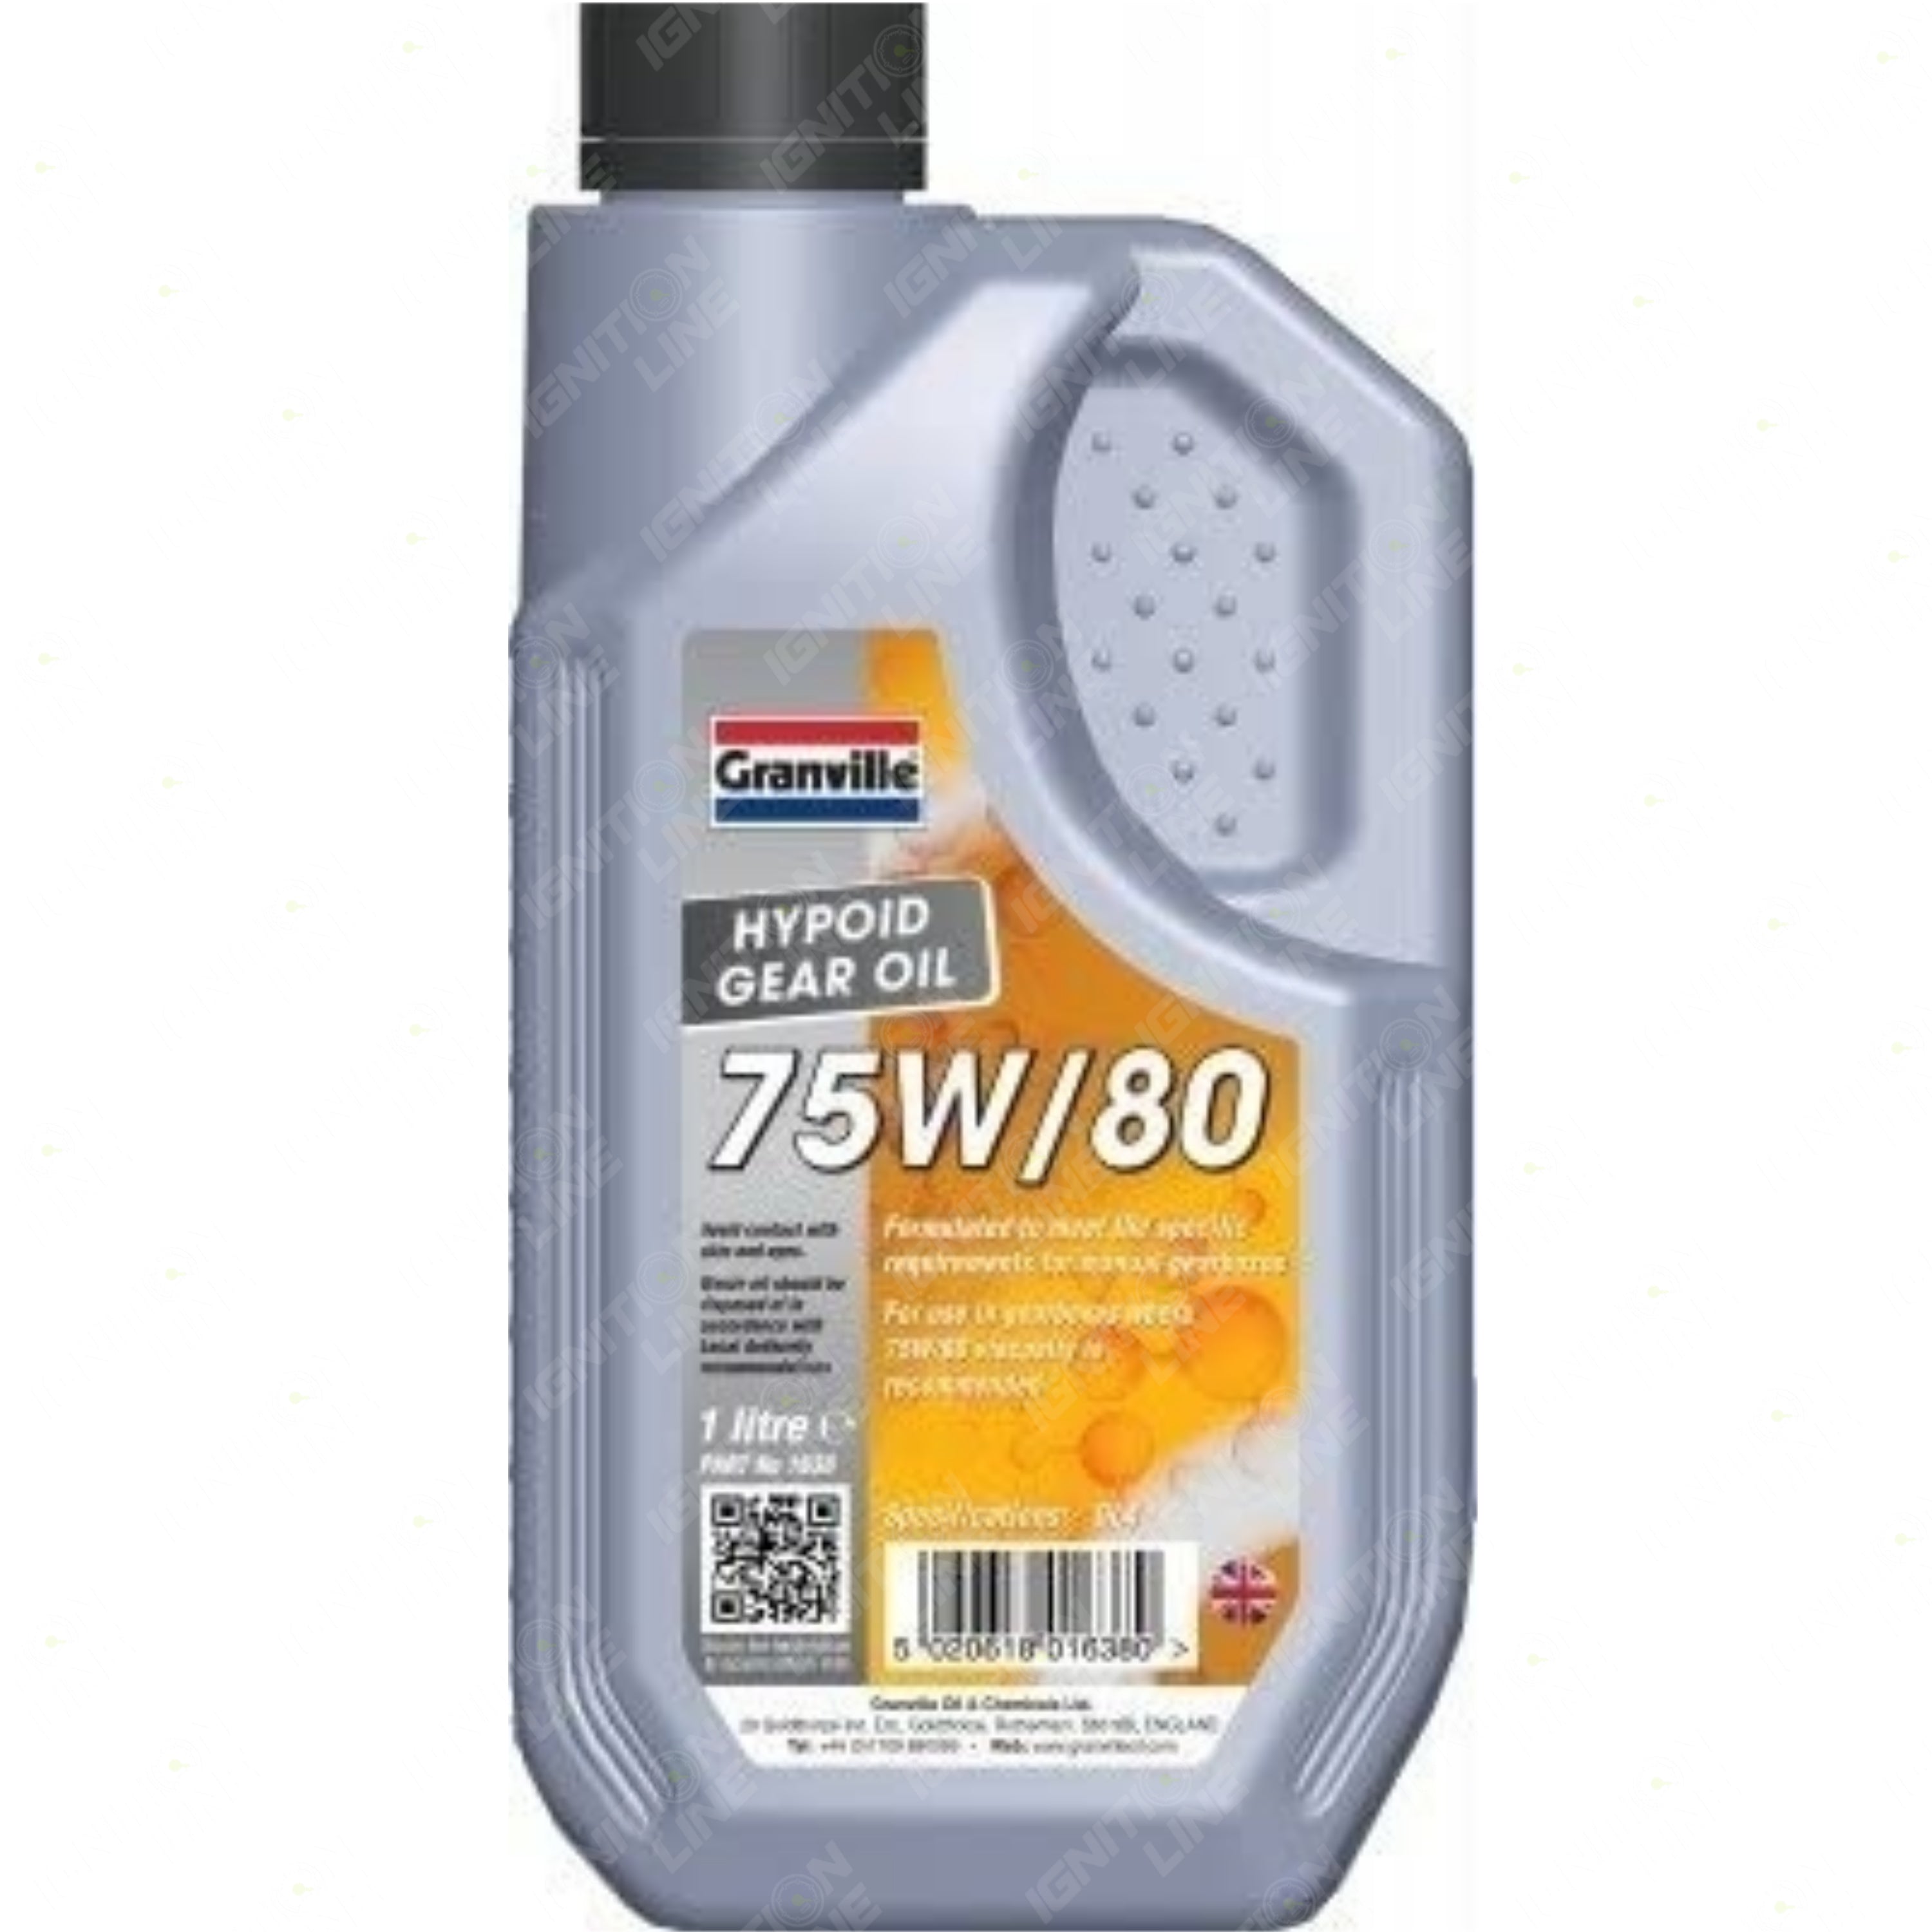 Granville 75W/80 Hypoid Gear Oil 1 Litre